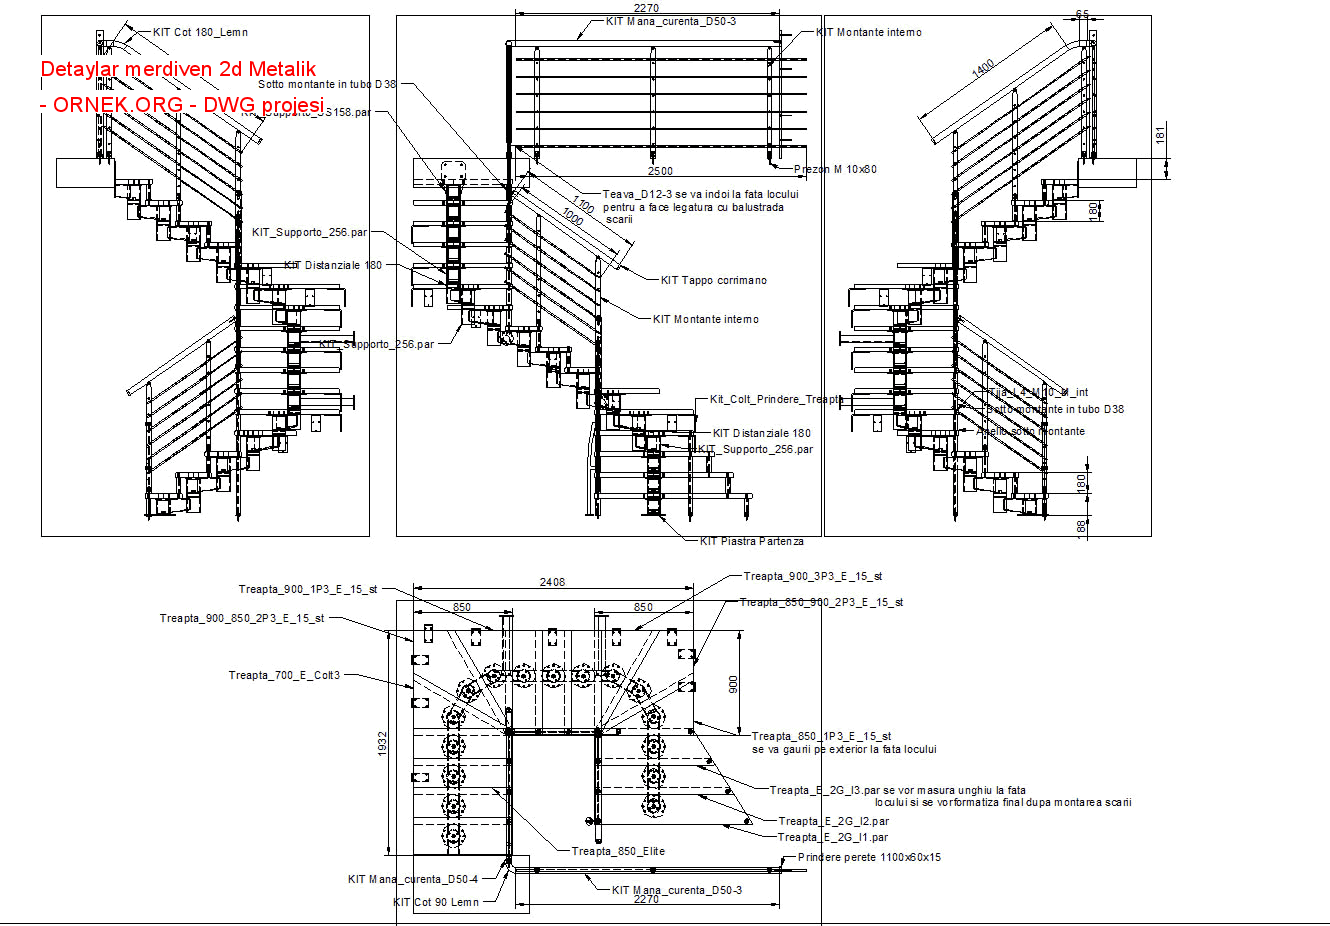 Detaylar merdiven 2d Metalik